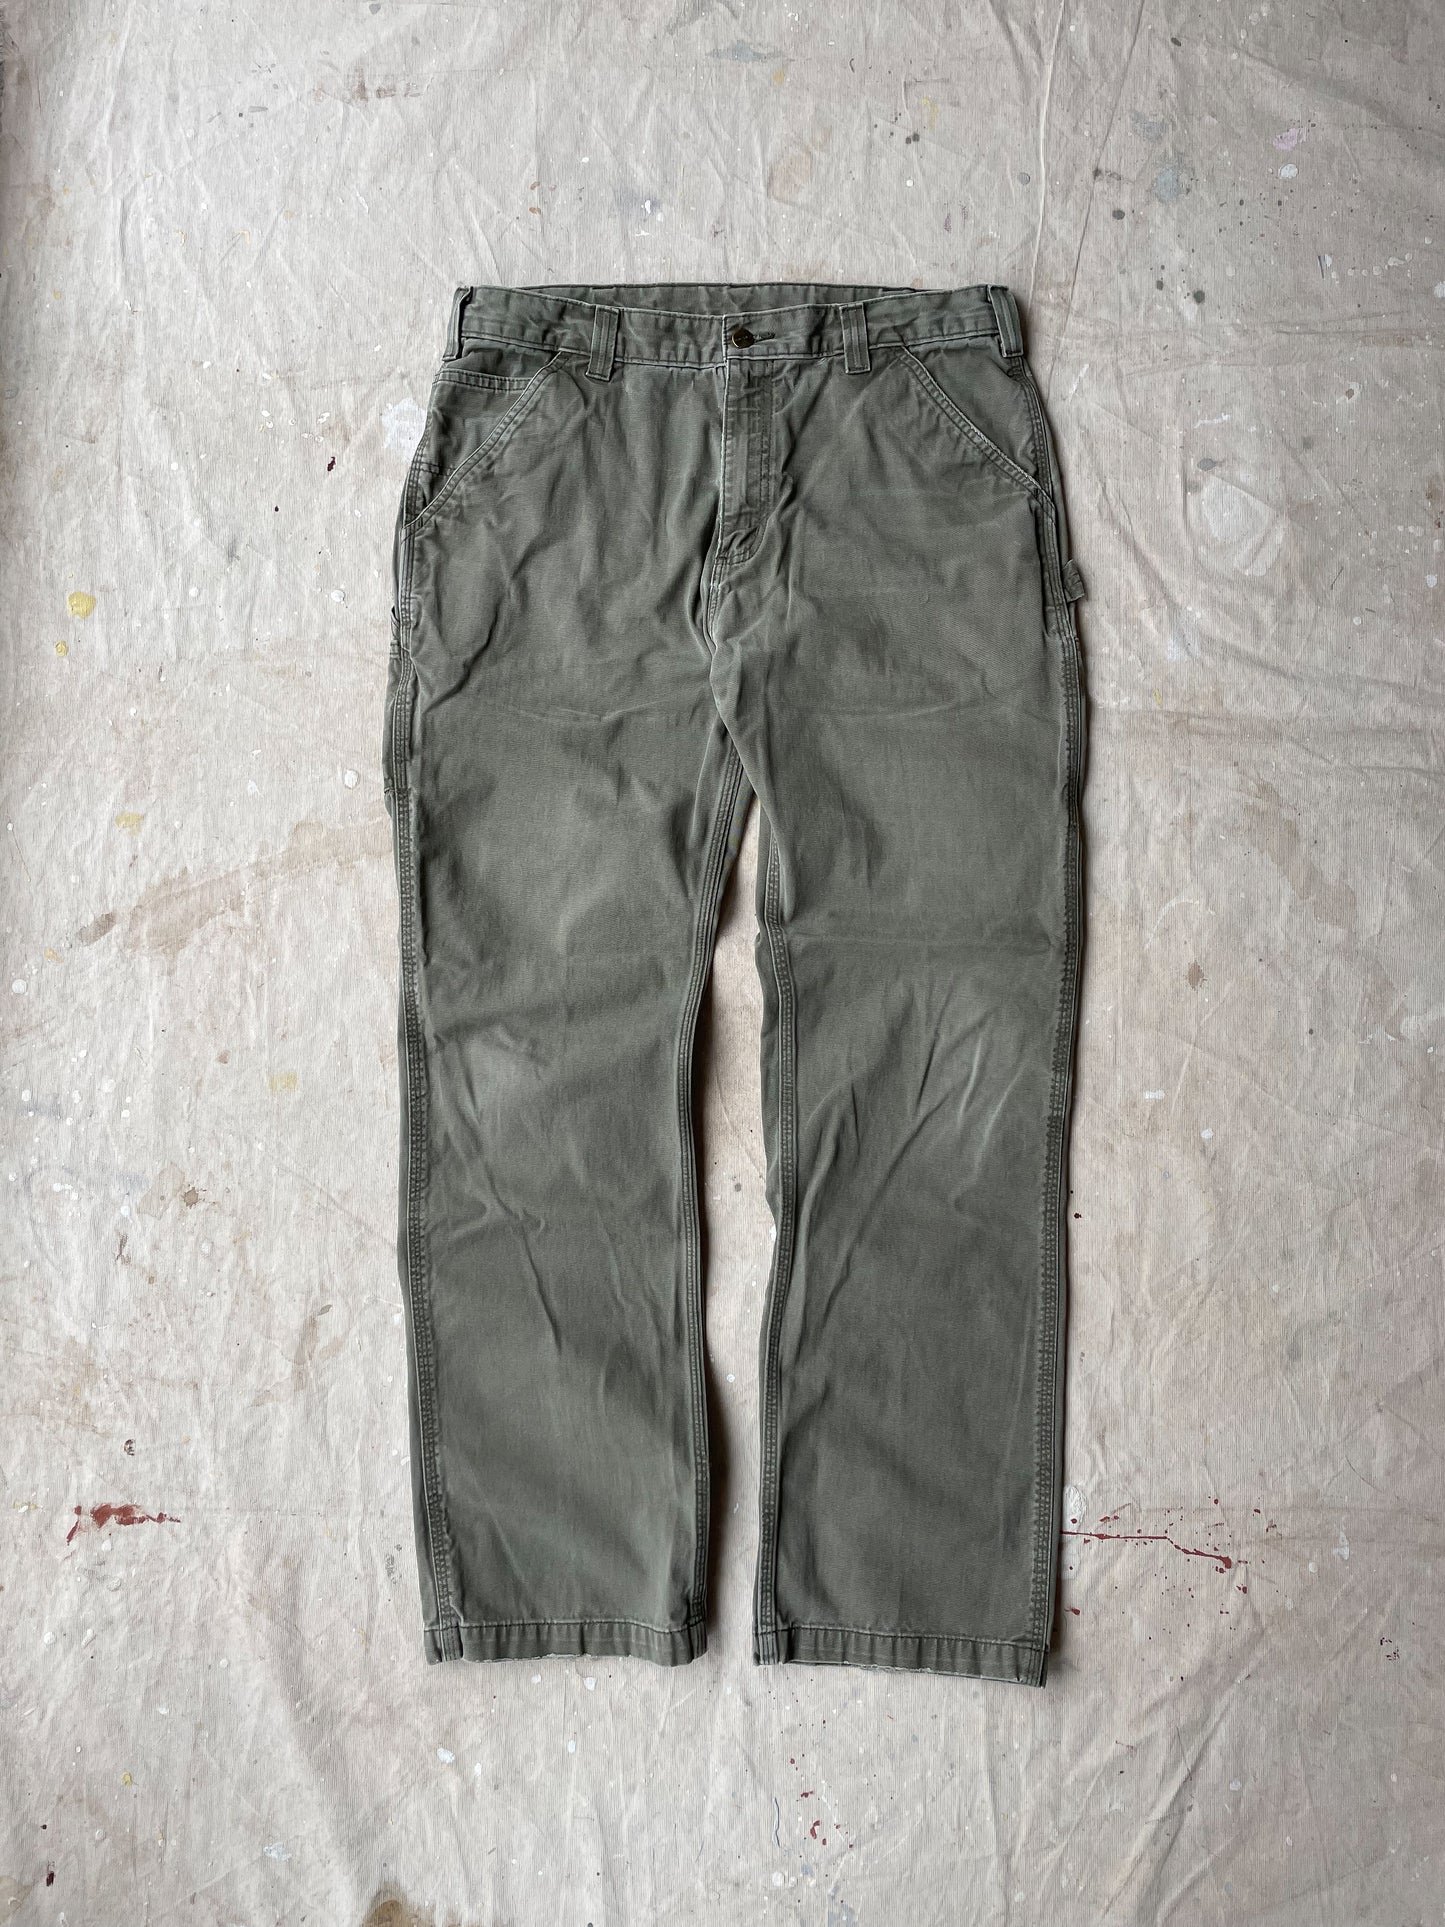 Carhartt Pants—[36x32]